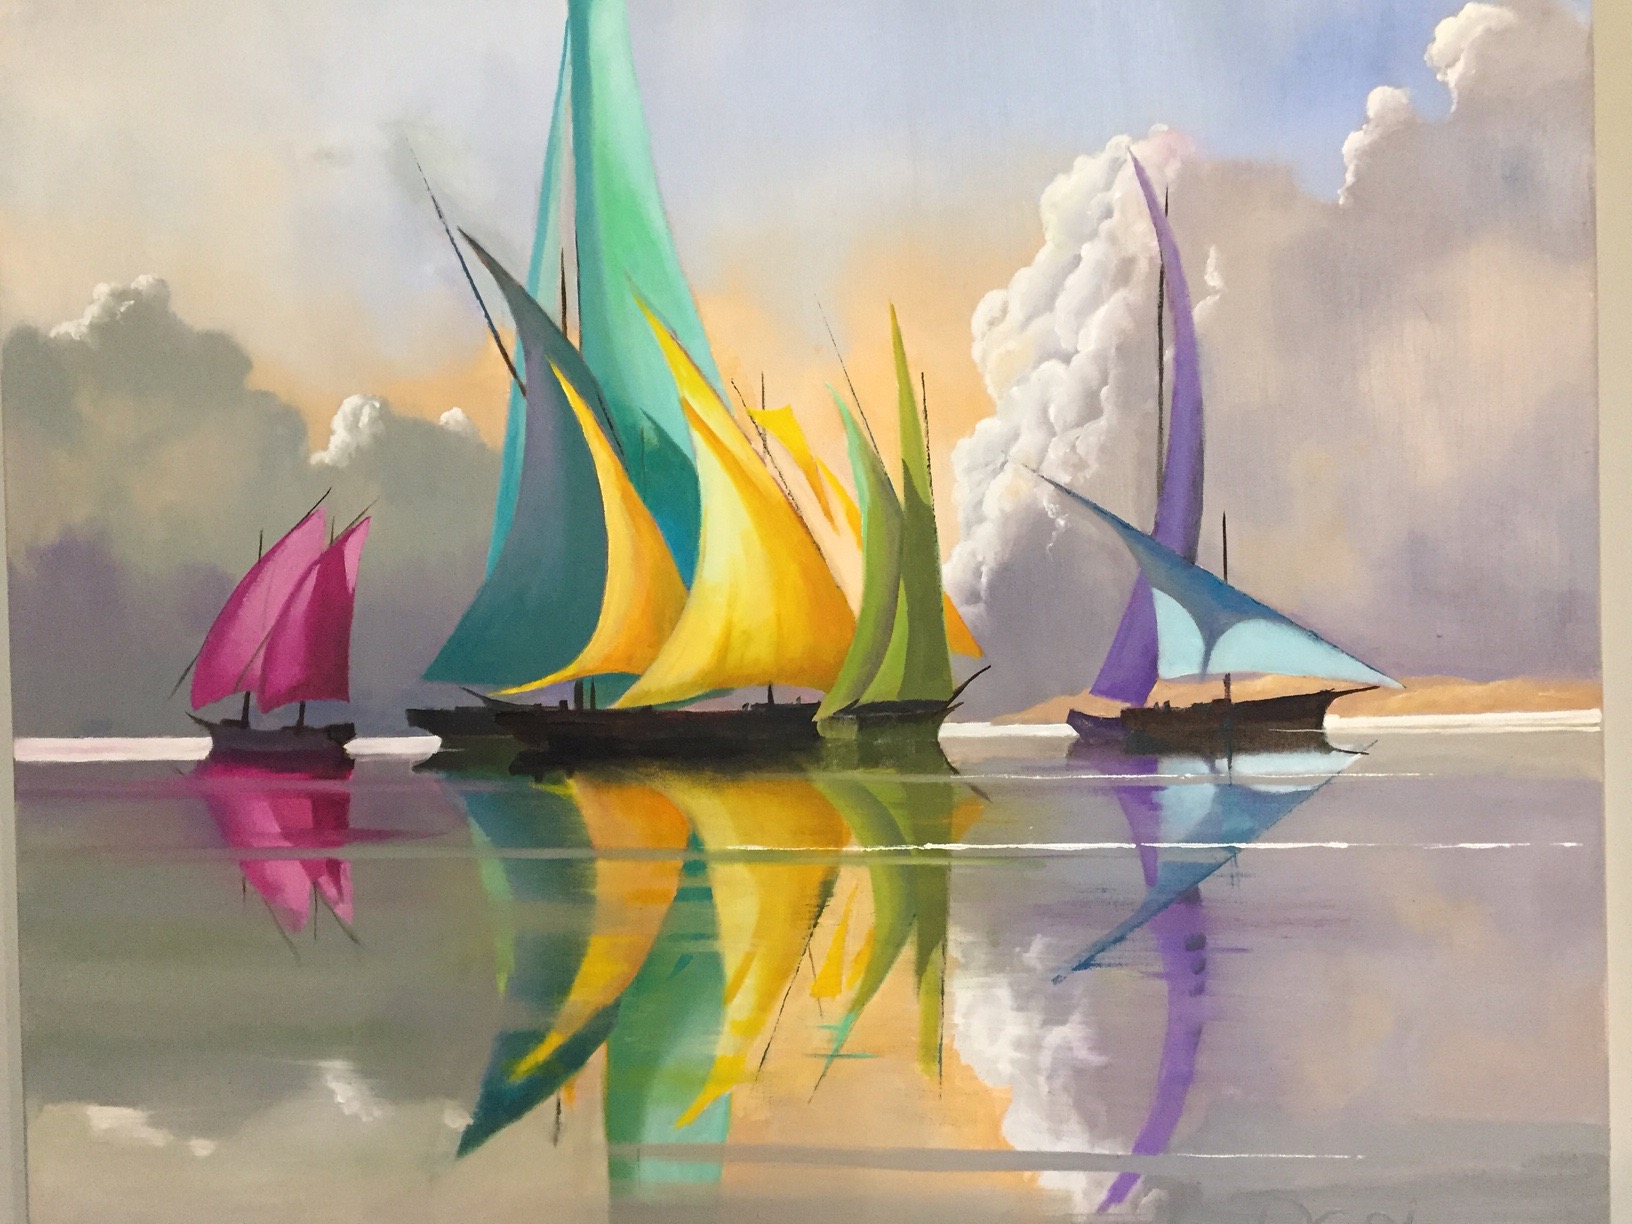 Scimitar Sails by Paul Stone Art